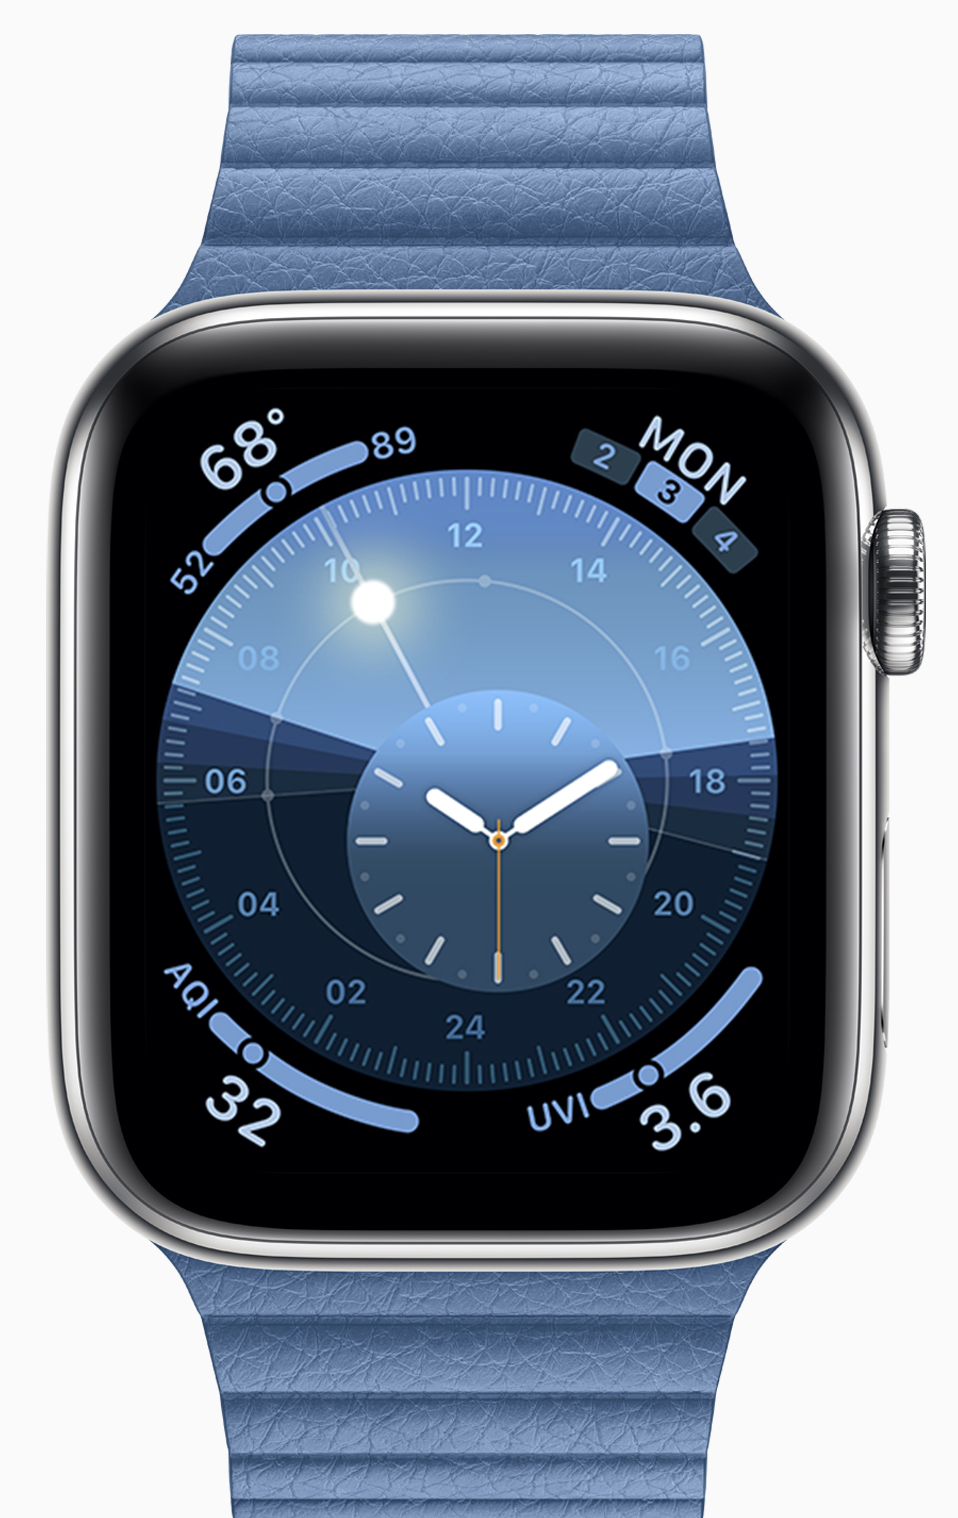 Apple posts sixth developer beta of watchOS 6.2.5